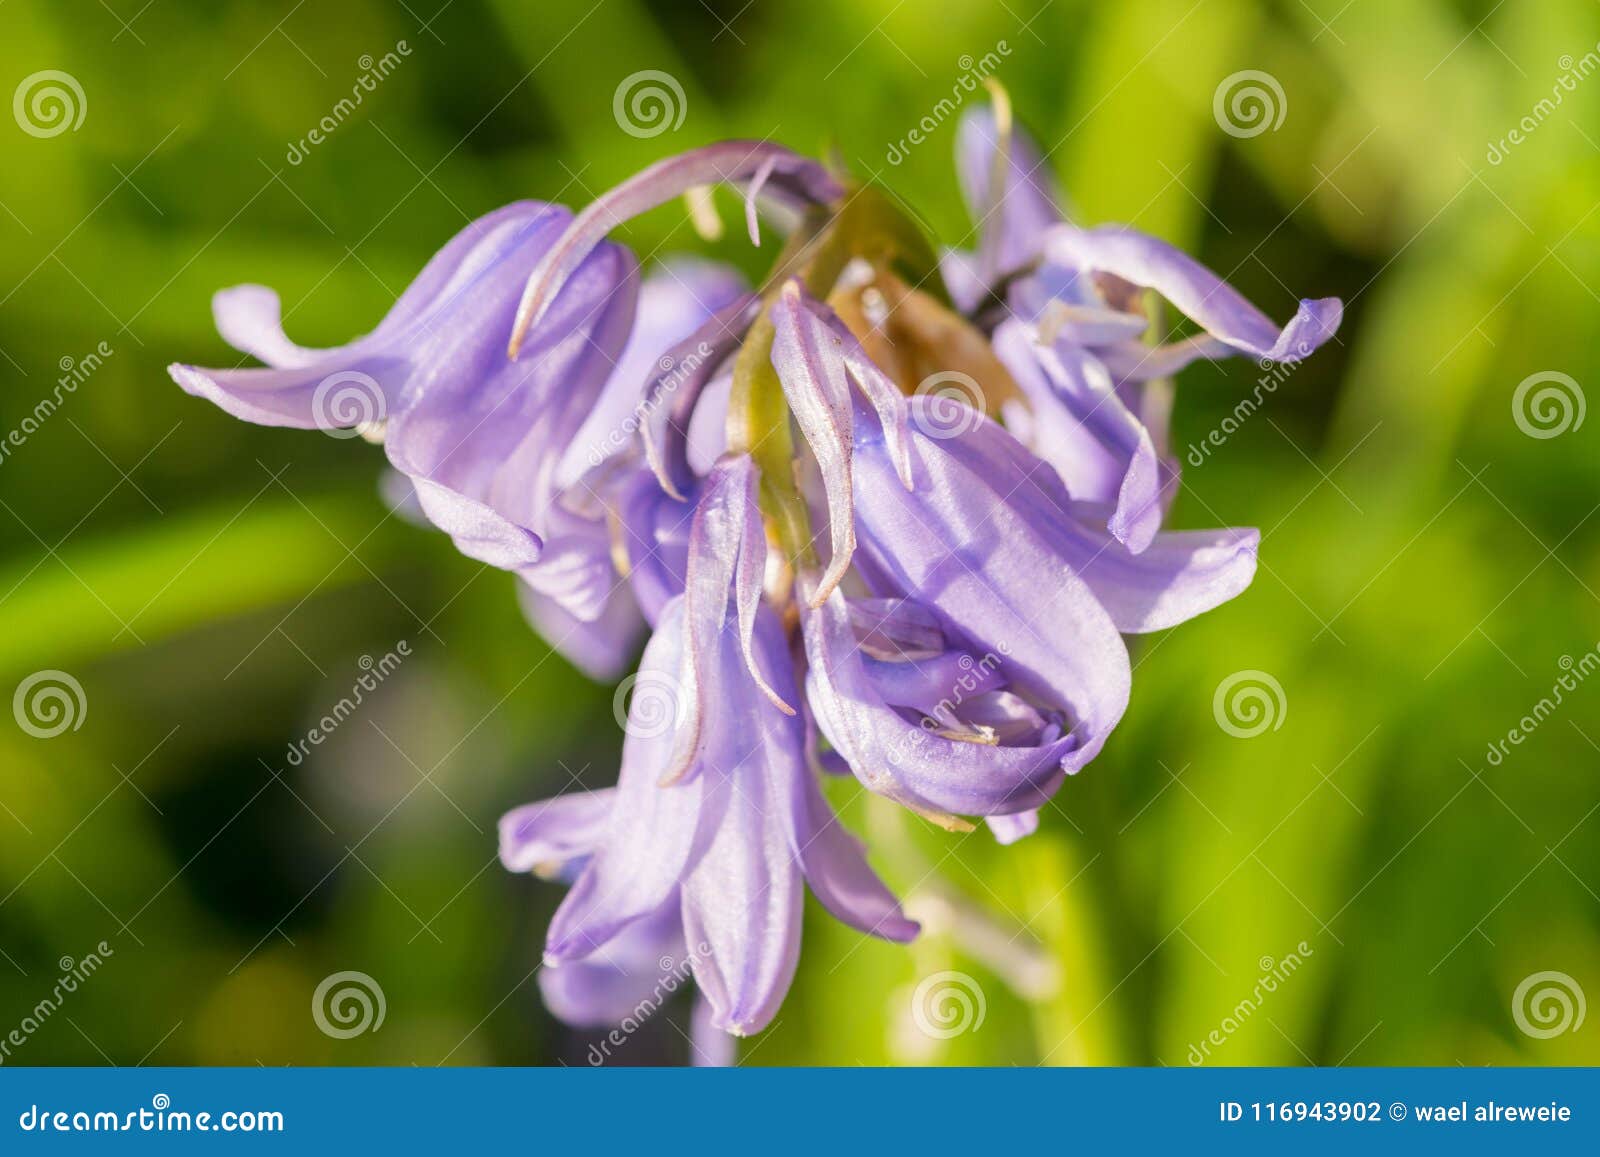 purple harebell flowers, campanula rotundifolia, closeup on green natural background, selective focus.